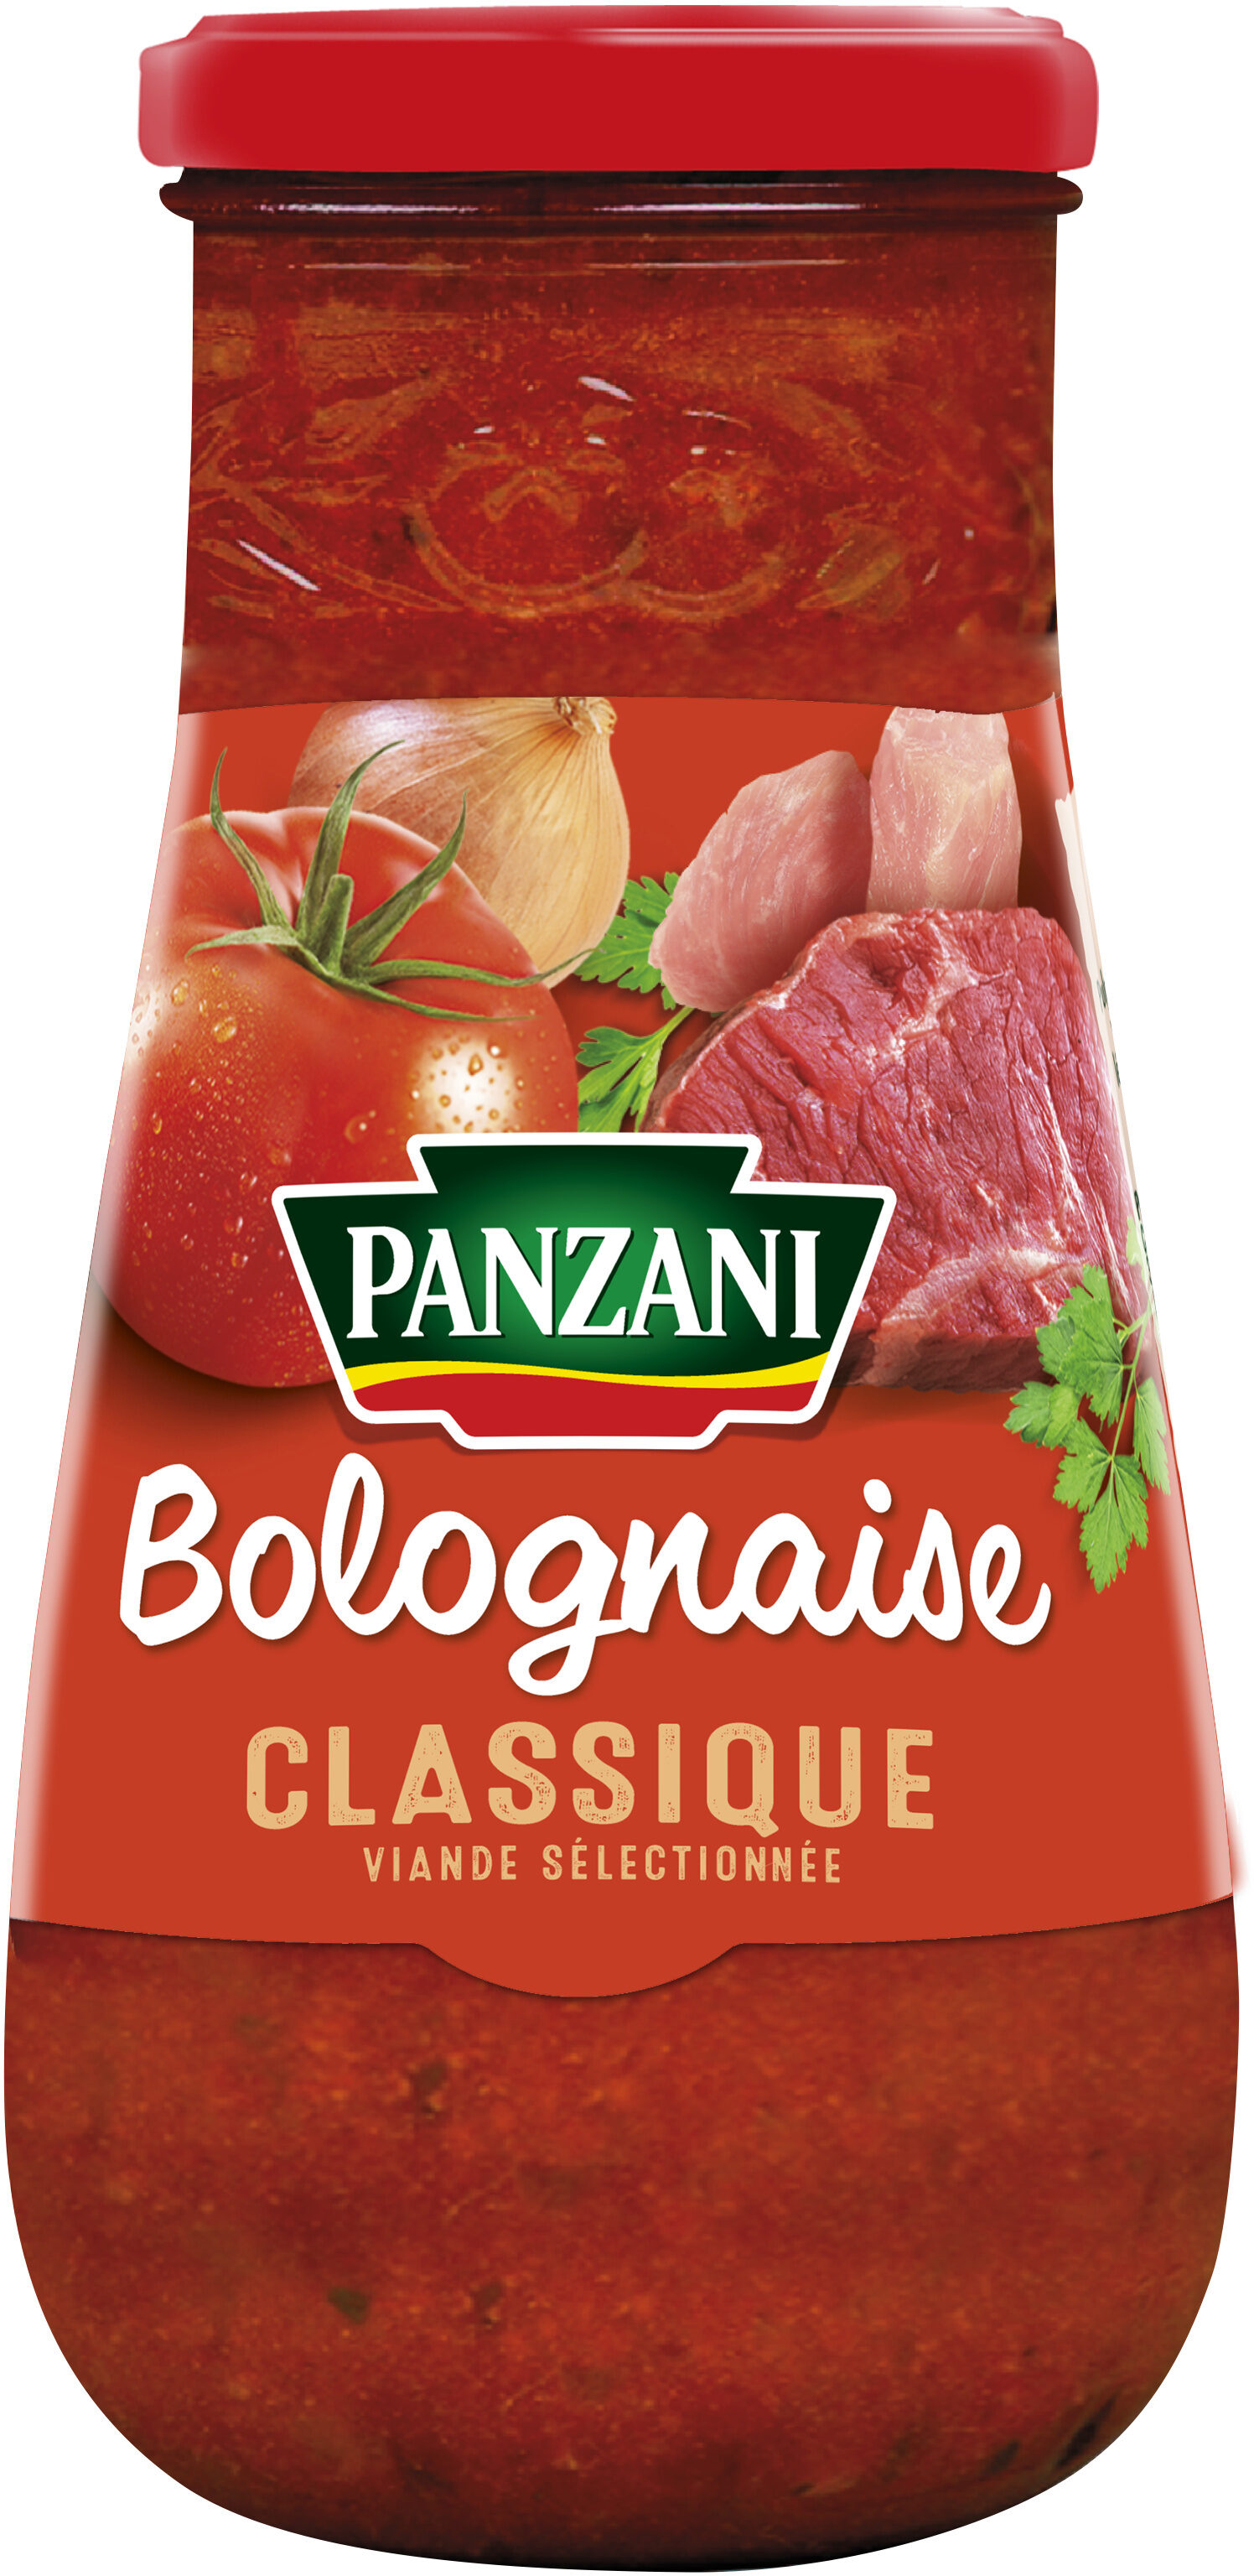 Panzani - spf - sauce bolognaise classique 425g - Produkt - fr